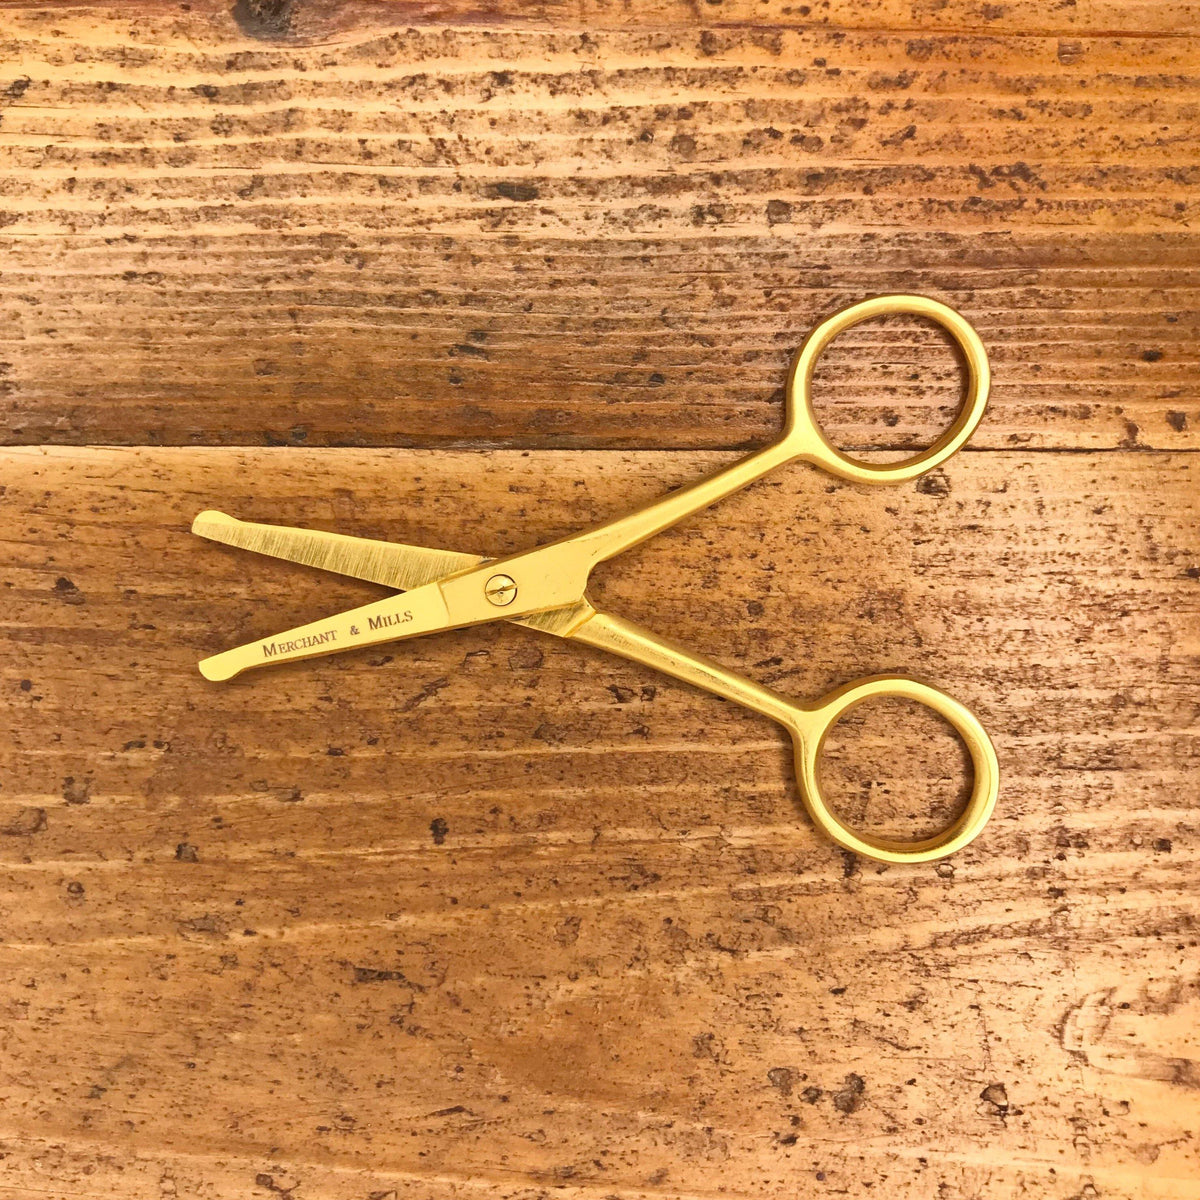 Merchant & Mills Short Safety Scissors - theweavingroom